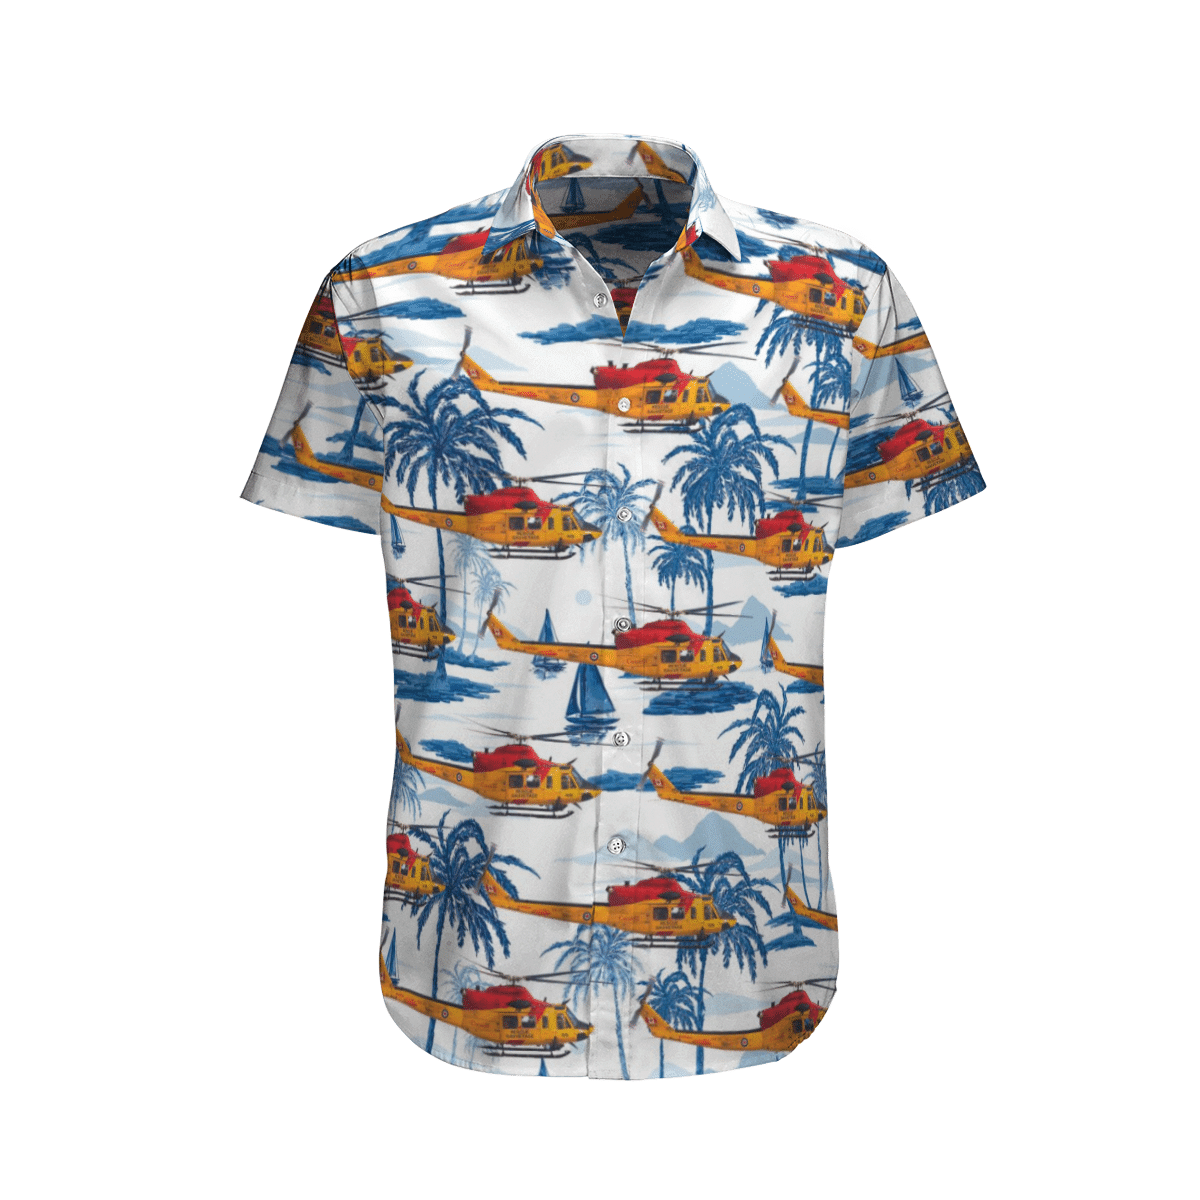 Get a new Hawaiian shirt to enjoy summer vacation 92